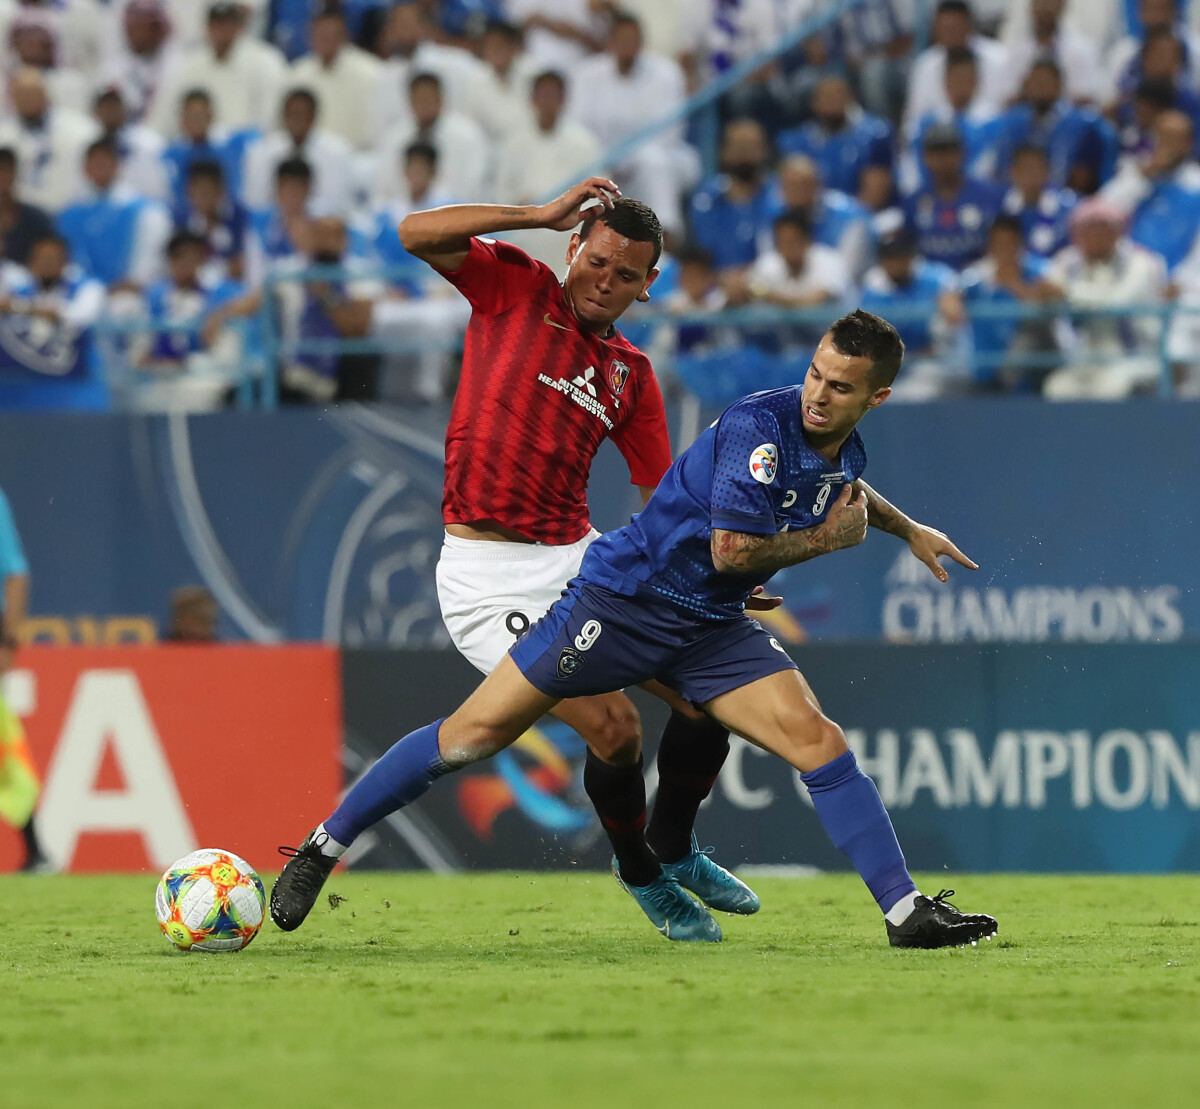 Giovinco, Gomes lead Al-Hilal to Asian Champions League title